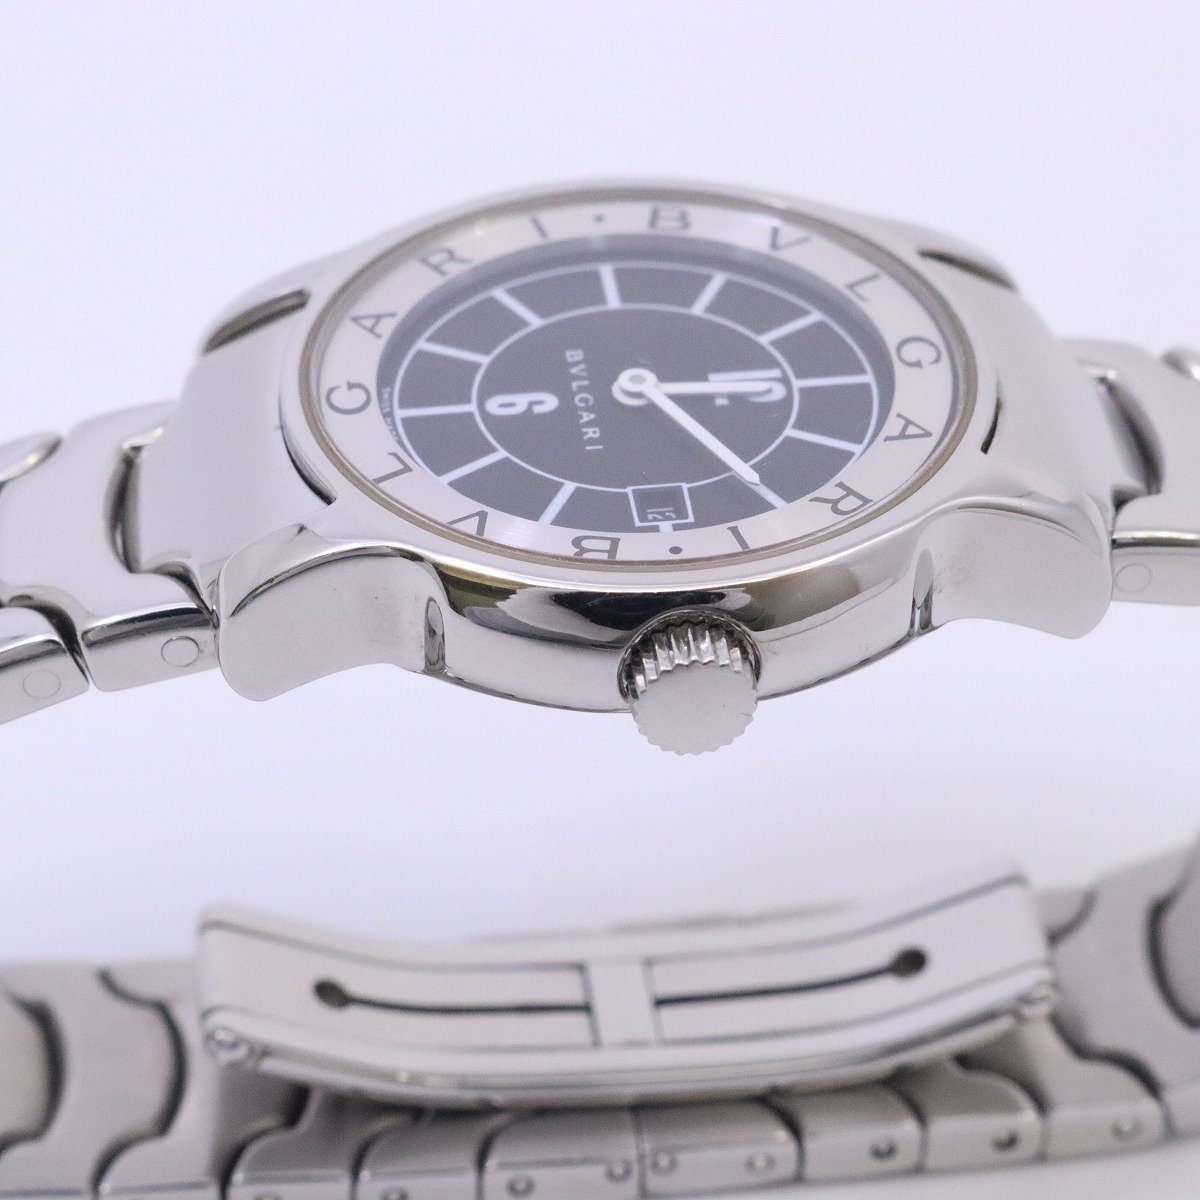  BVLGARY Solotempo кварц женские наручные часы чёрный циферблат оригинальный SS ремень ST29S[... ломбард ]